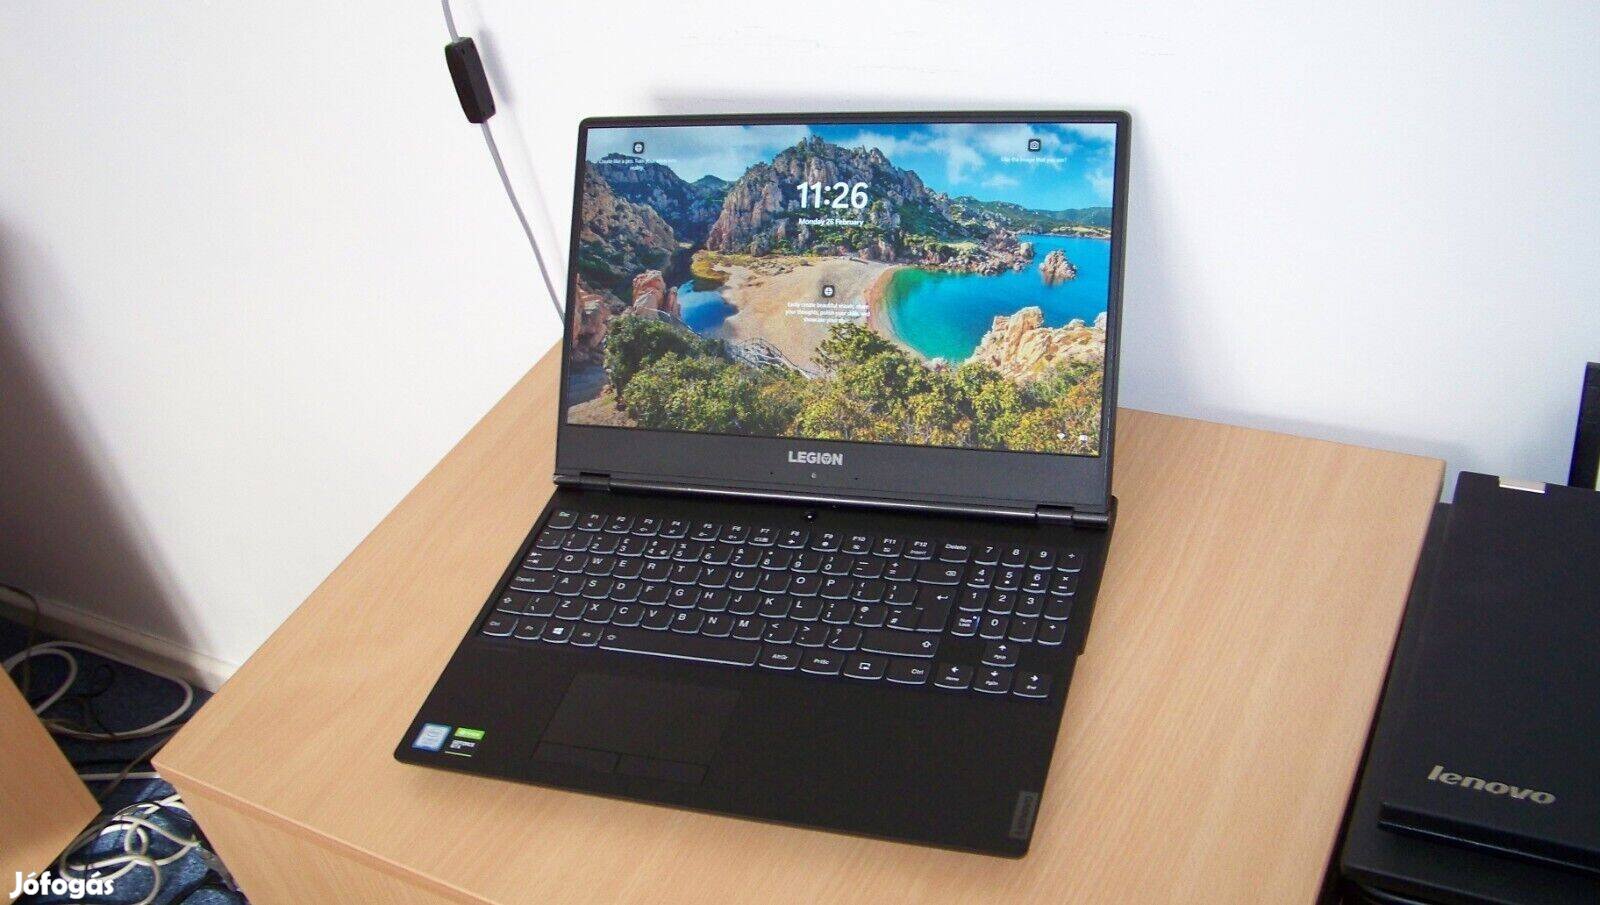 Lenovo Legion laptop eladó 17 colos , gamer, Rtx 2060 6 Gb Gddr6 192 b